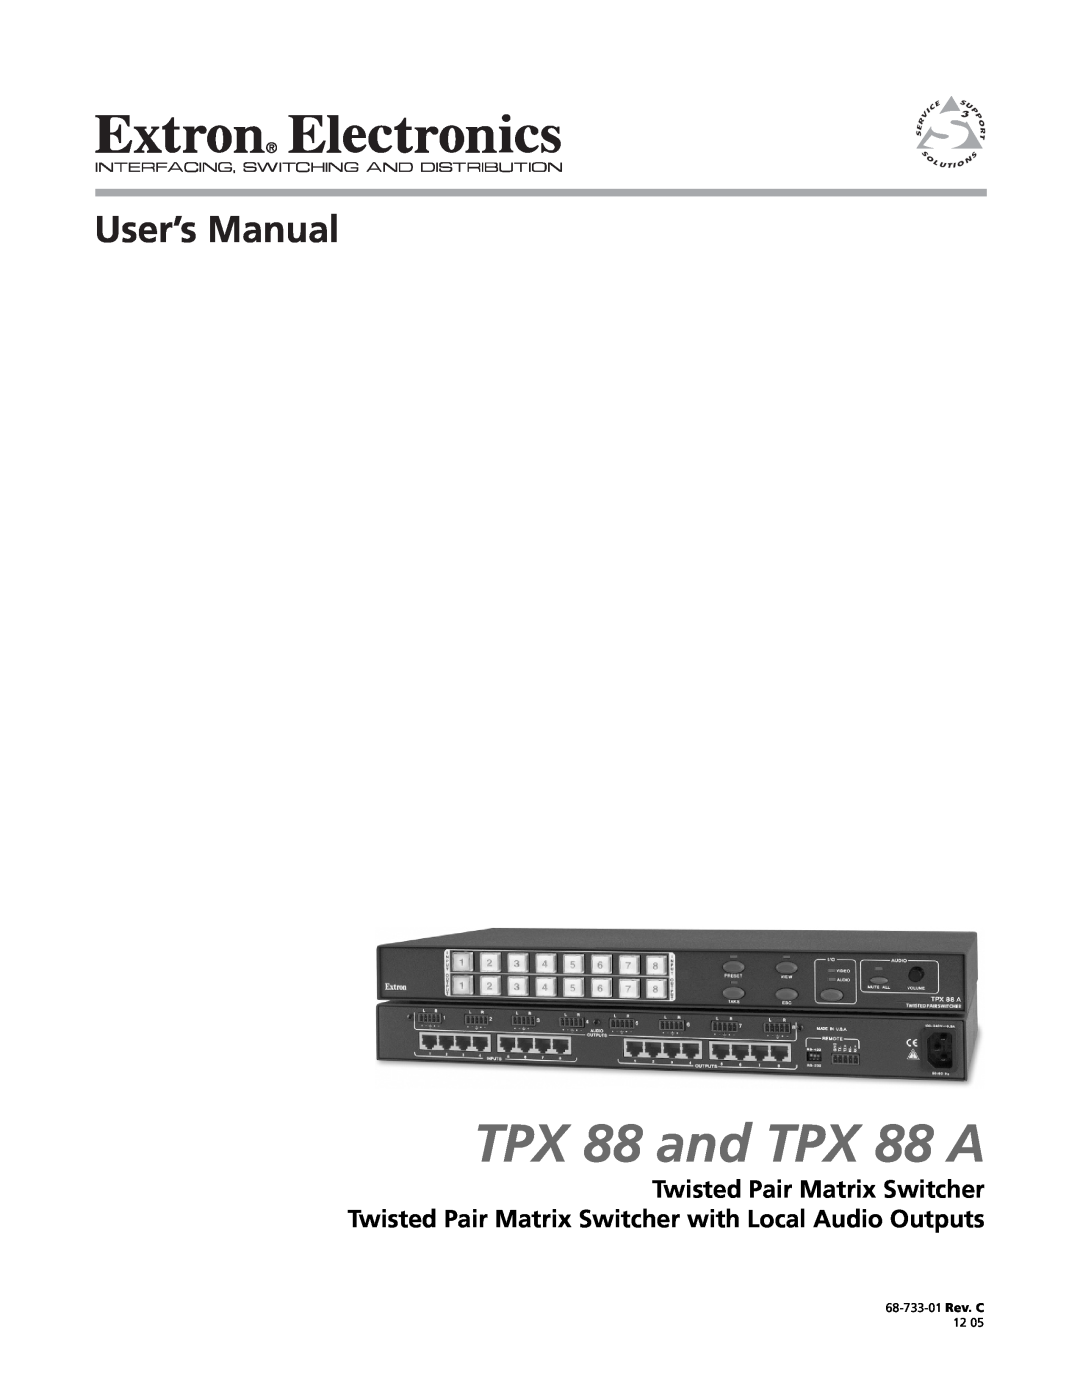 Extron electronic TPX 88 A specifications Common Features, Description, Model, 60-542-02, 60-542-01 